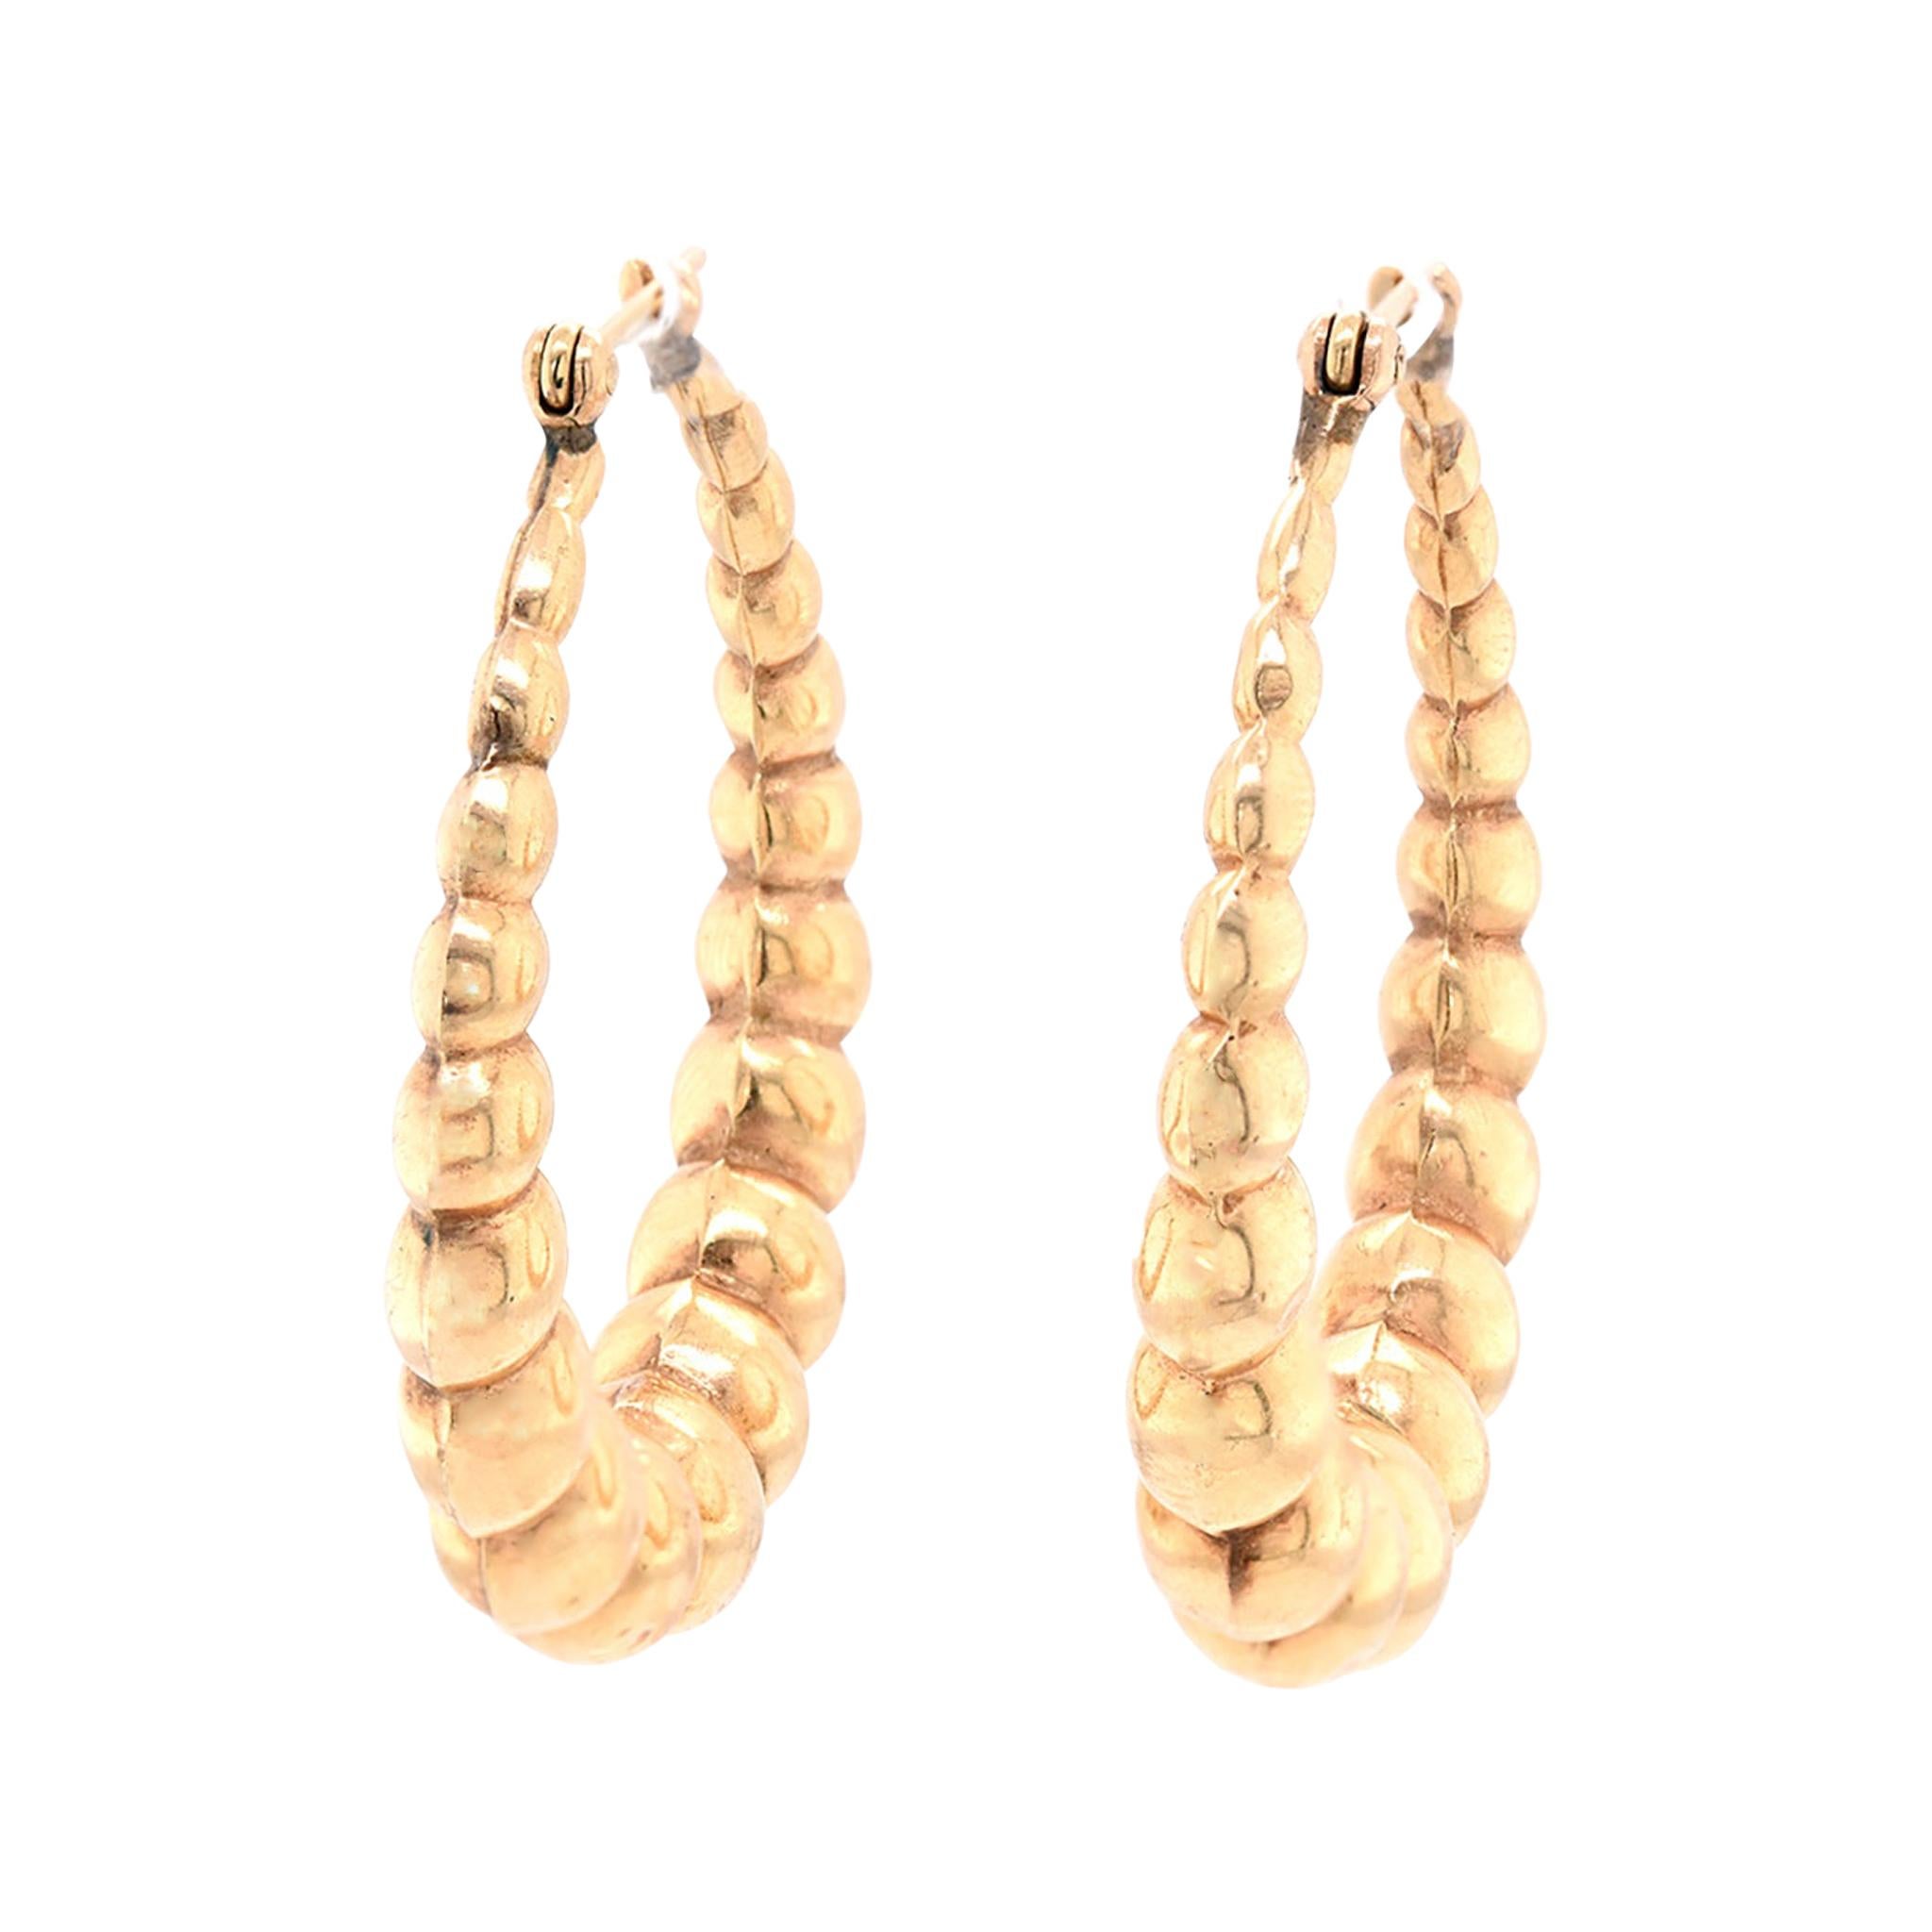 14 Karat Yellow Gold Hoop Earrings